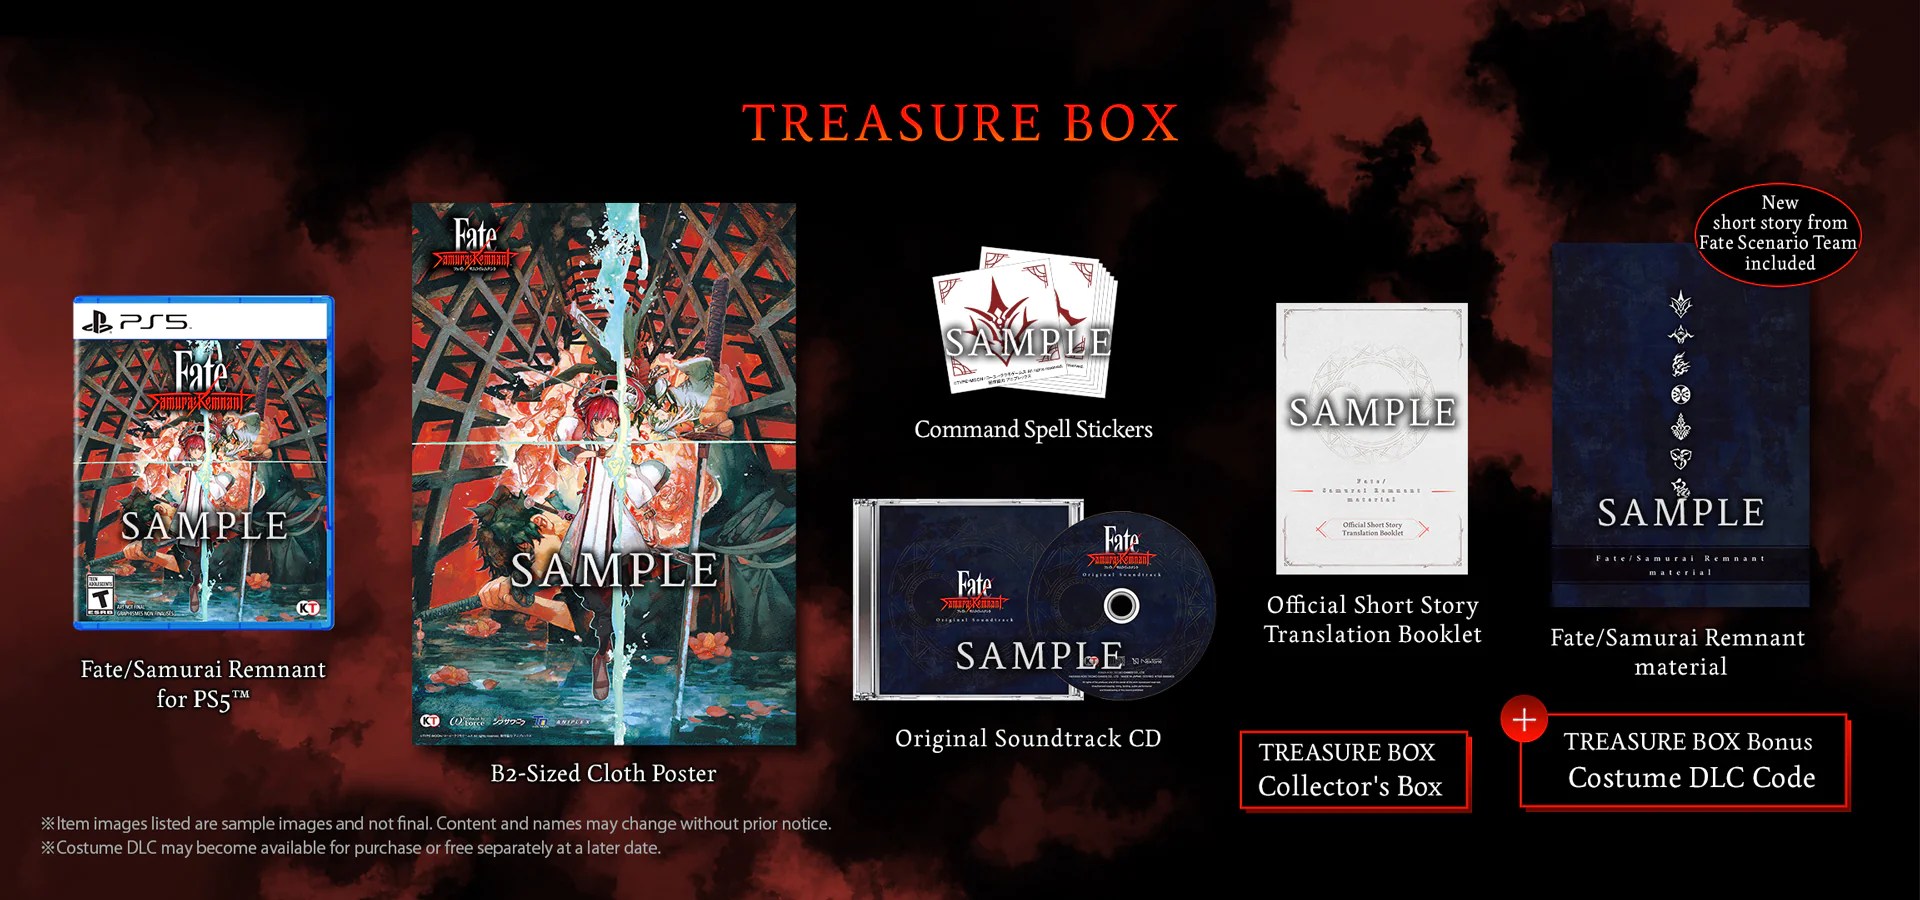 Is There a Fate/Samurai Remnant Treasure Box Collector's Edition?